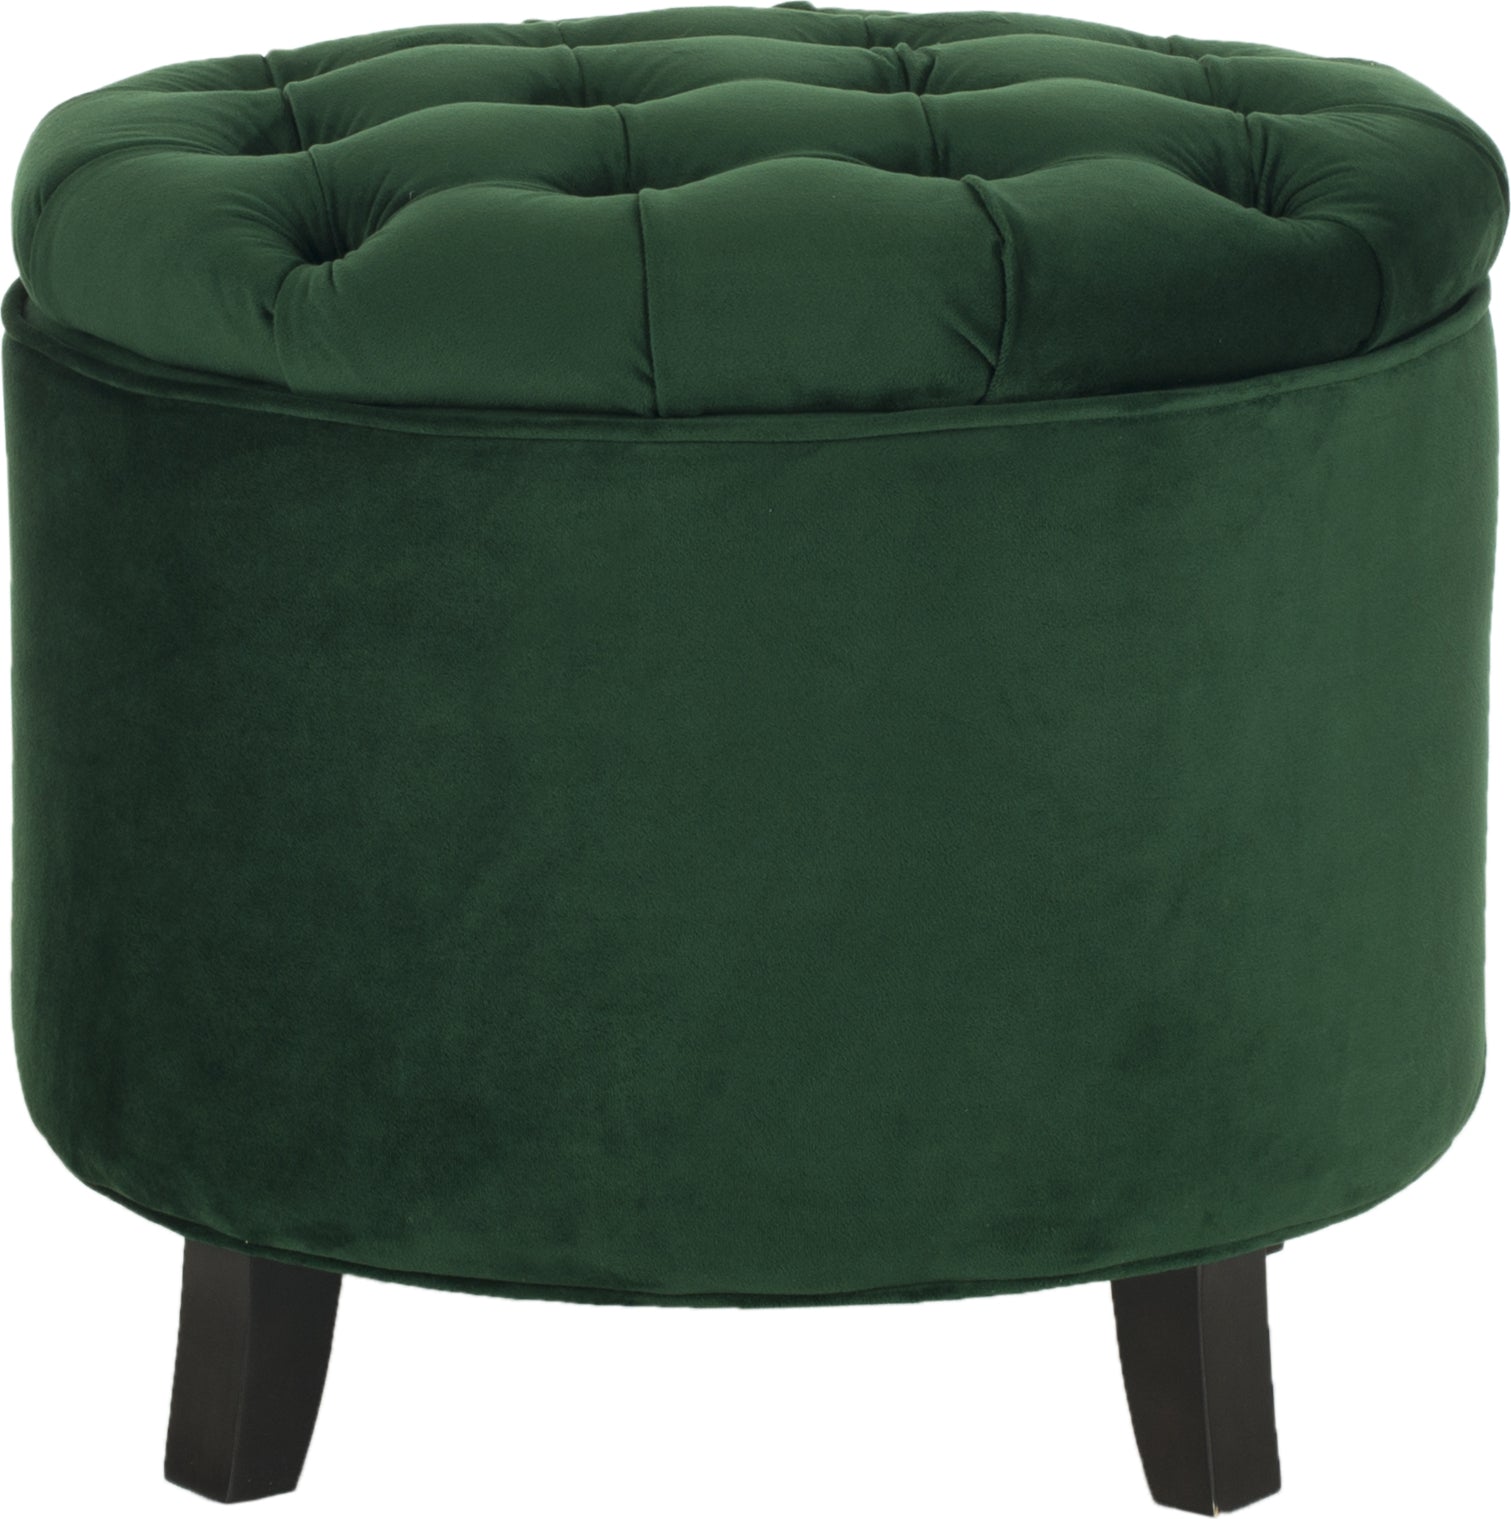 Safavieh Amelia Tufted Storage Ottoman Emerald and Espresso Furniture main image